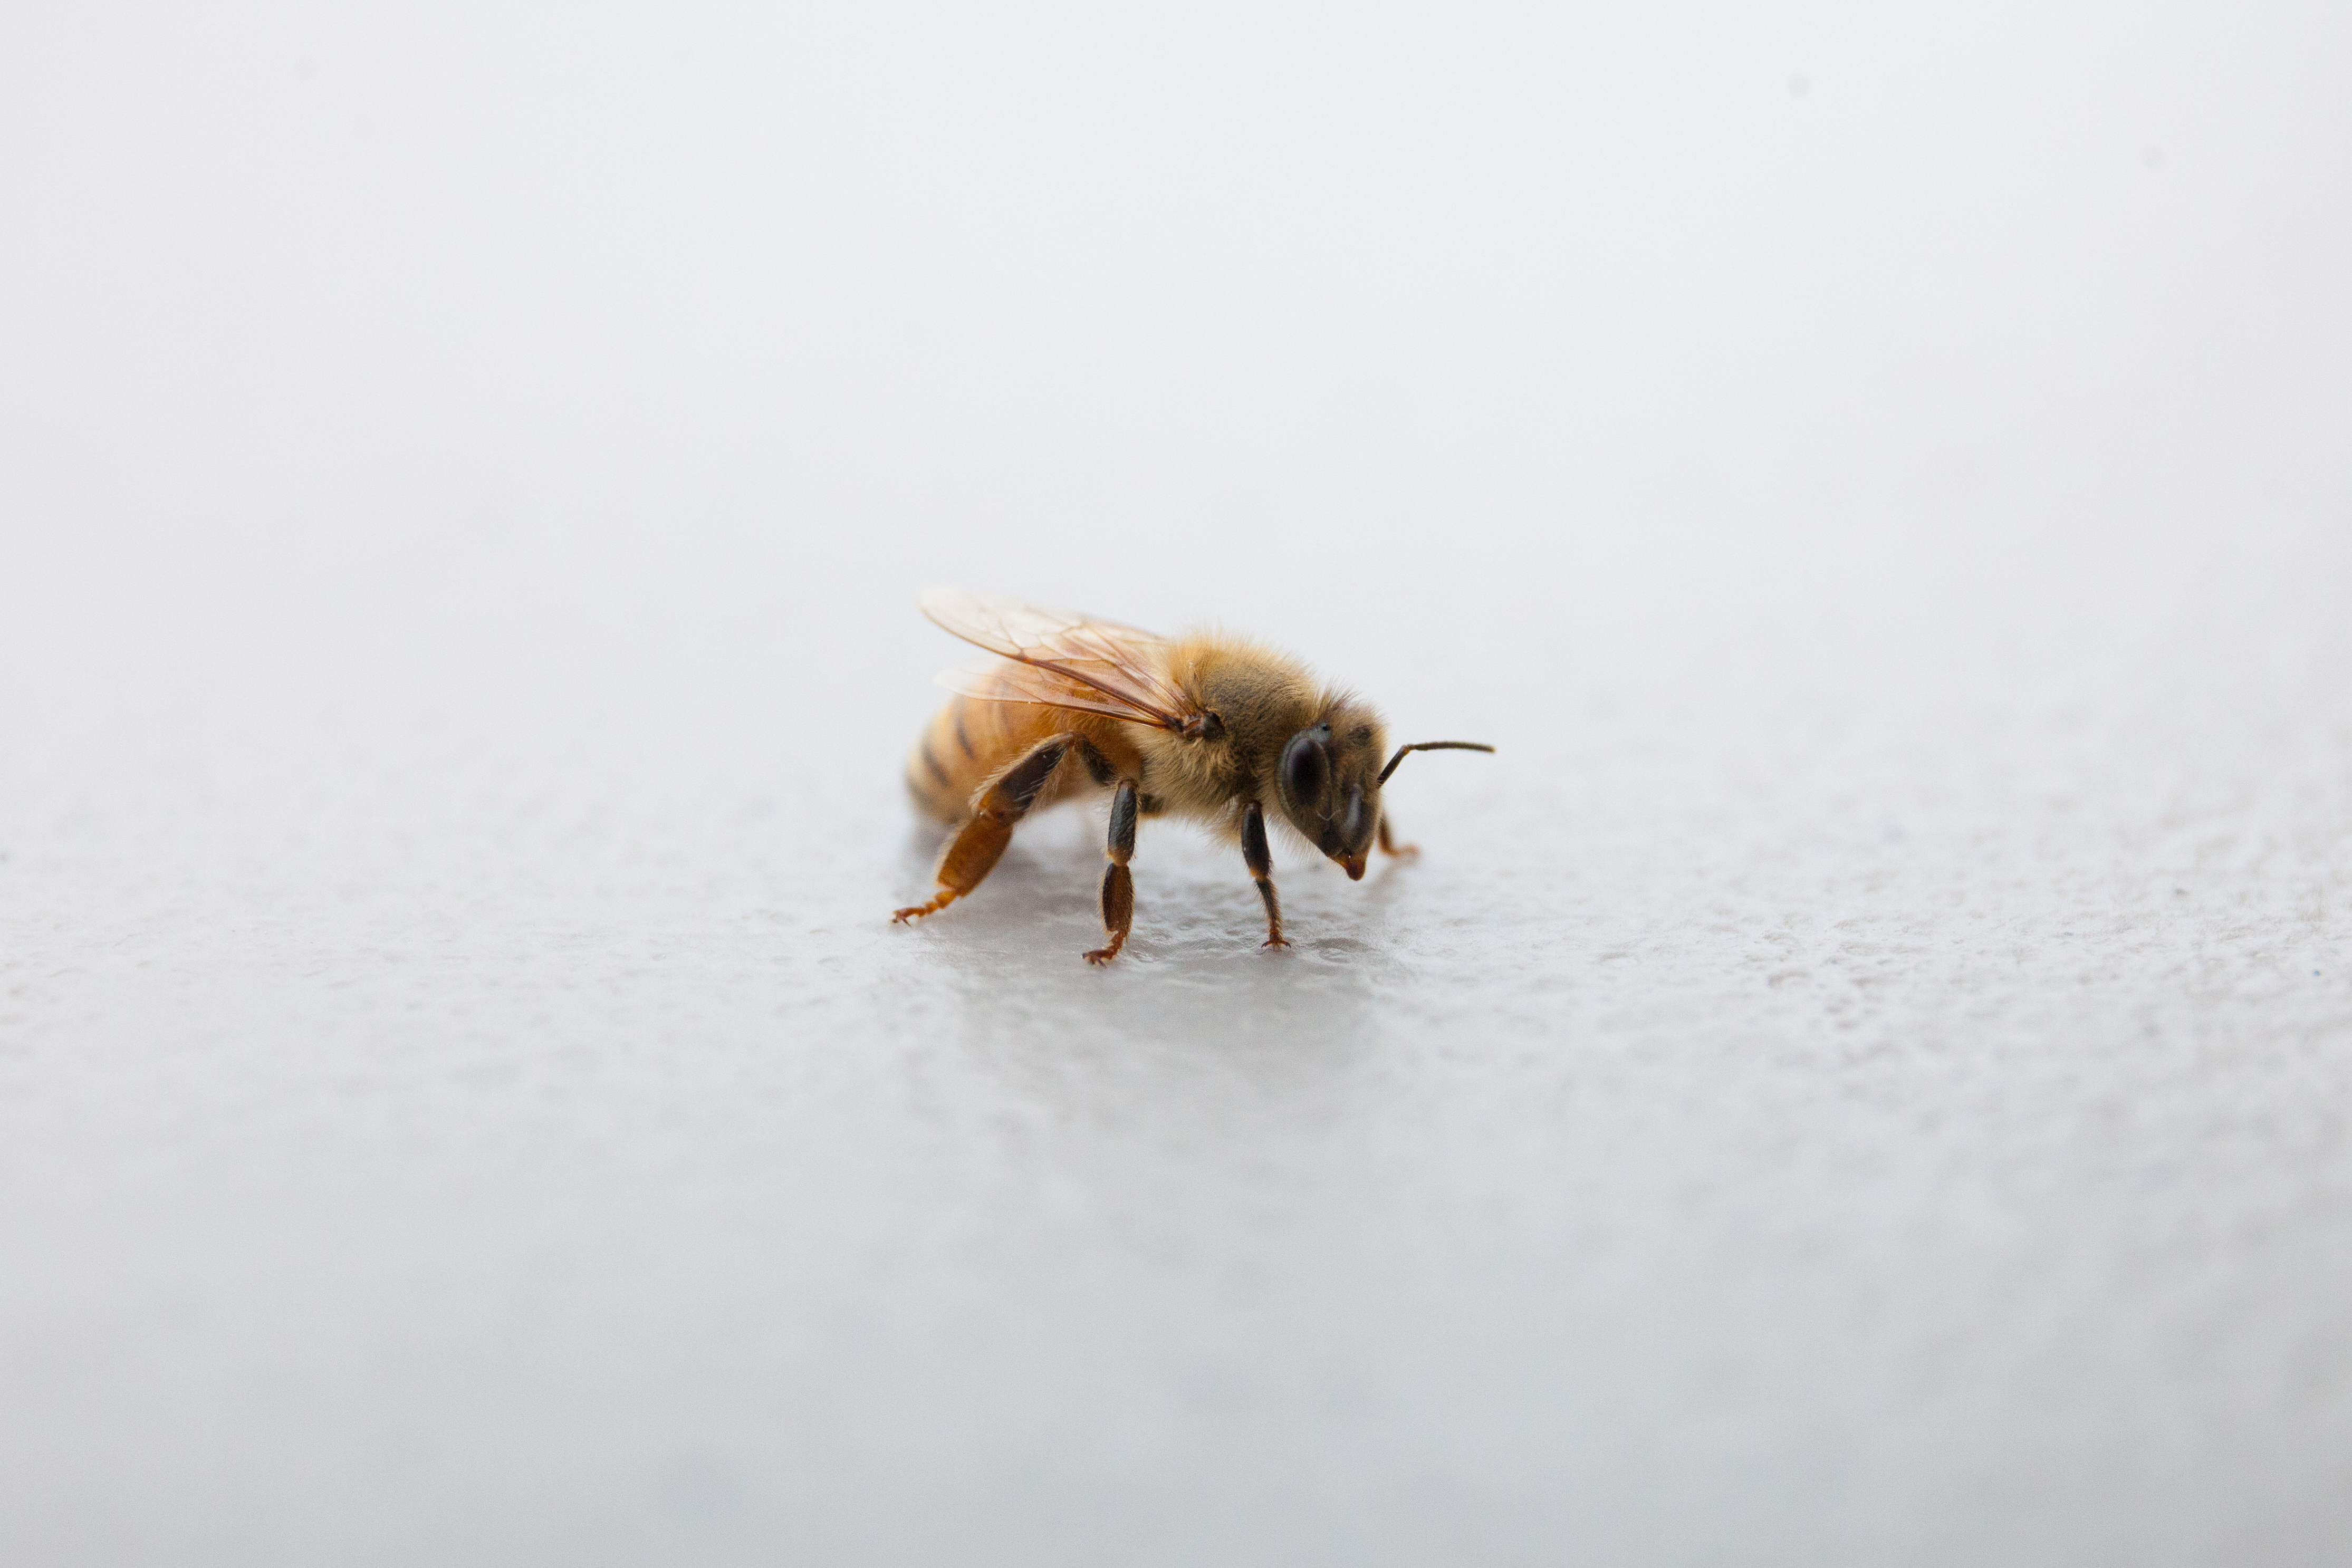 a single honey bee